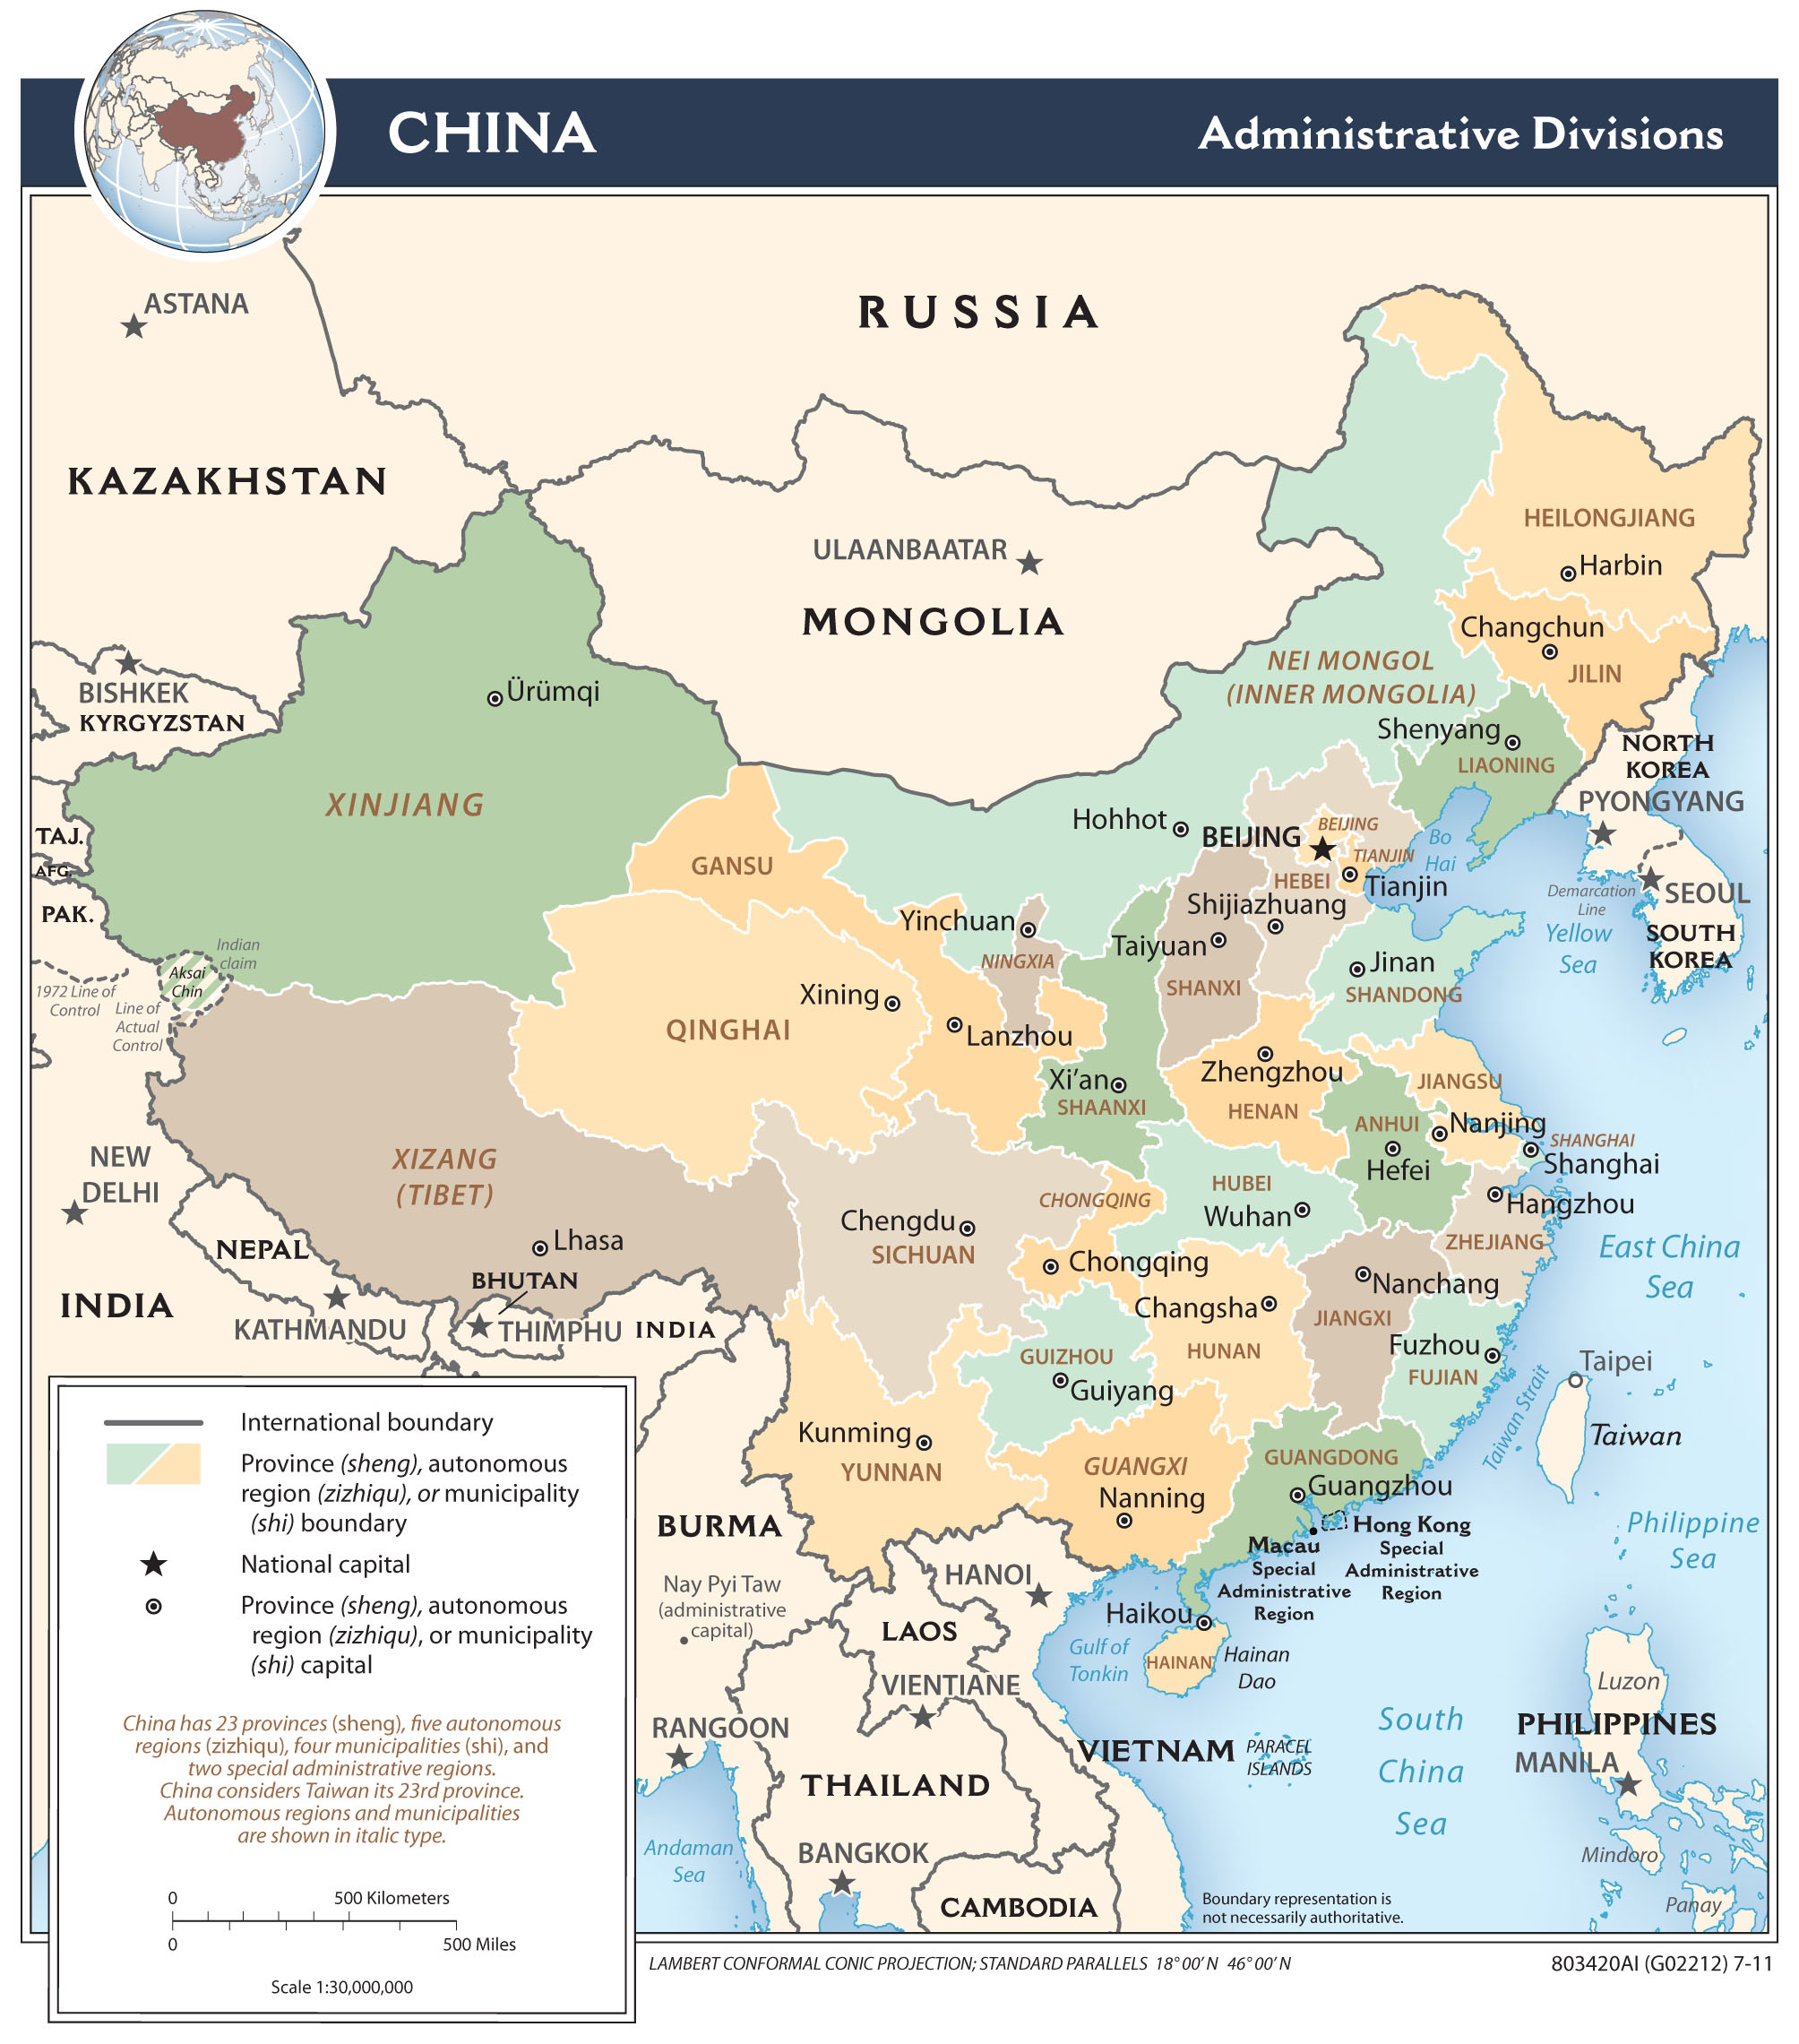 Administrative Divisions of China